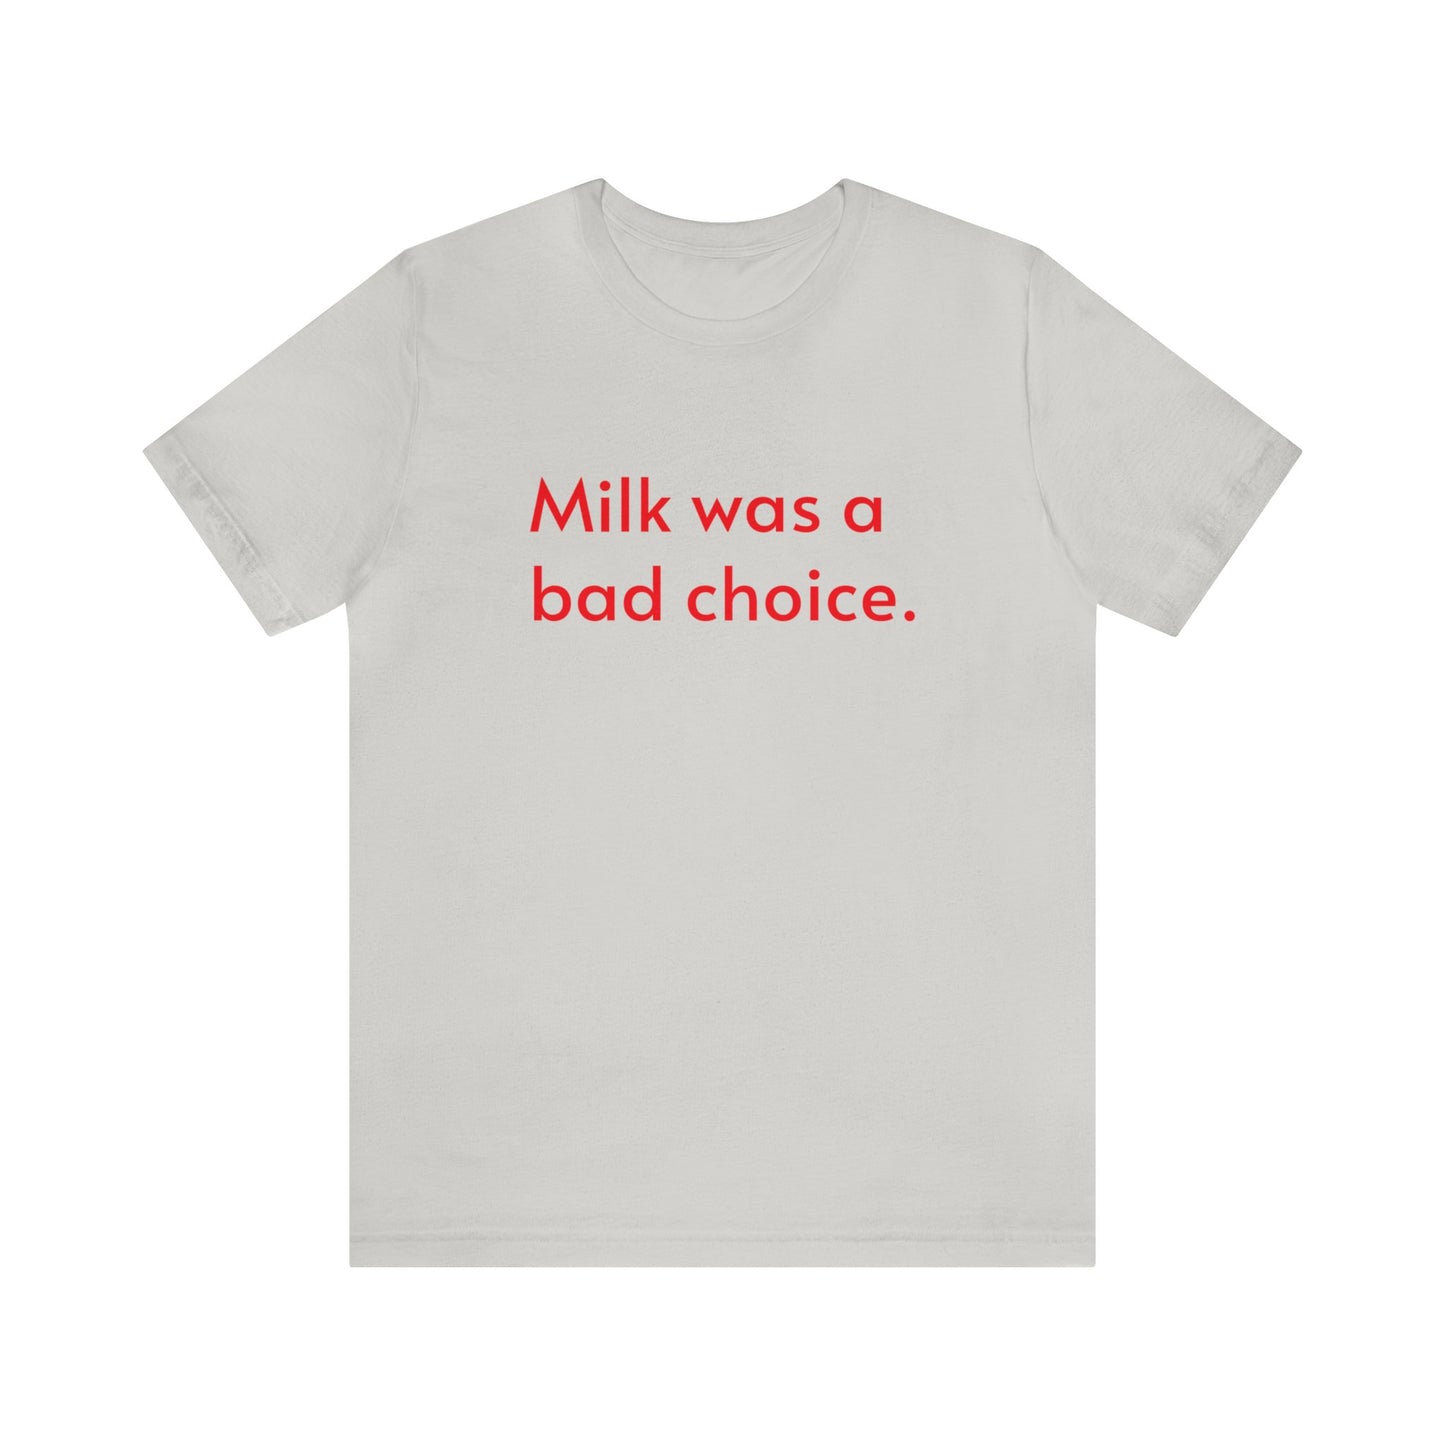 Milk was a bad choice.